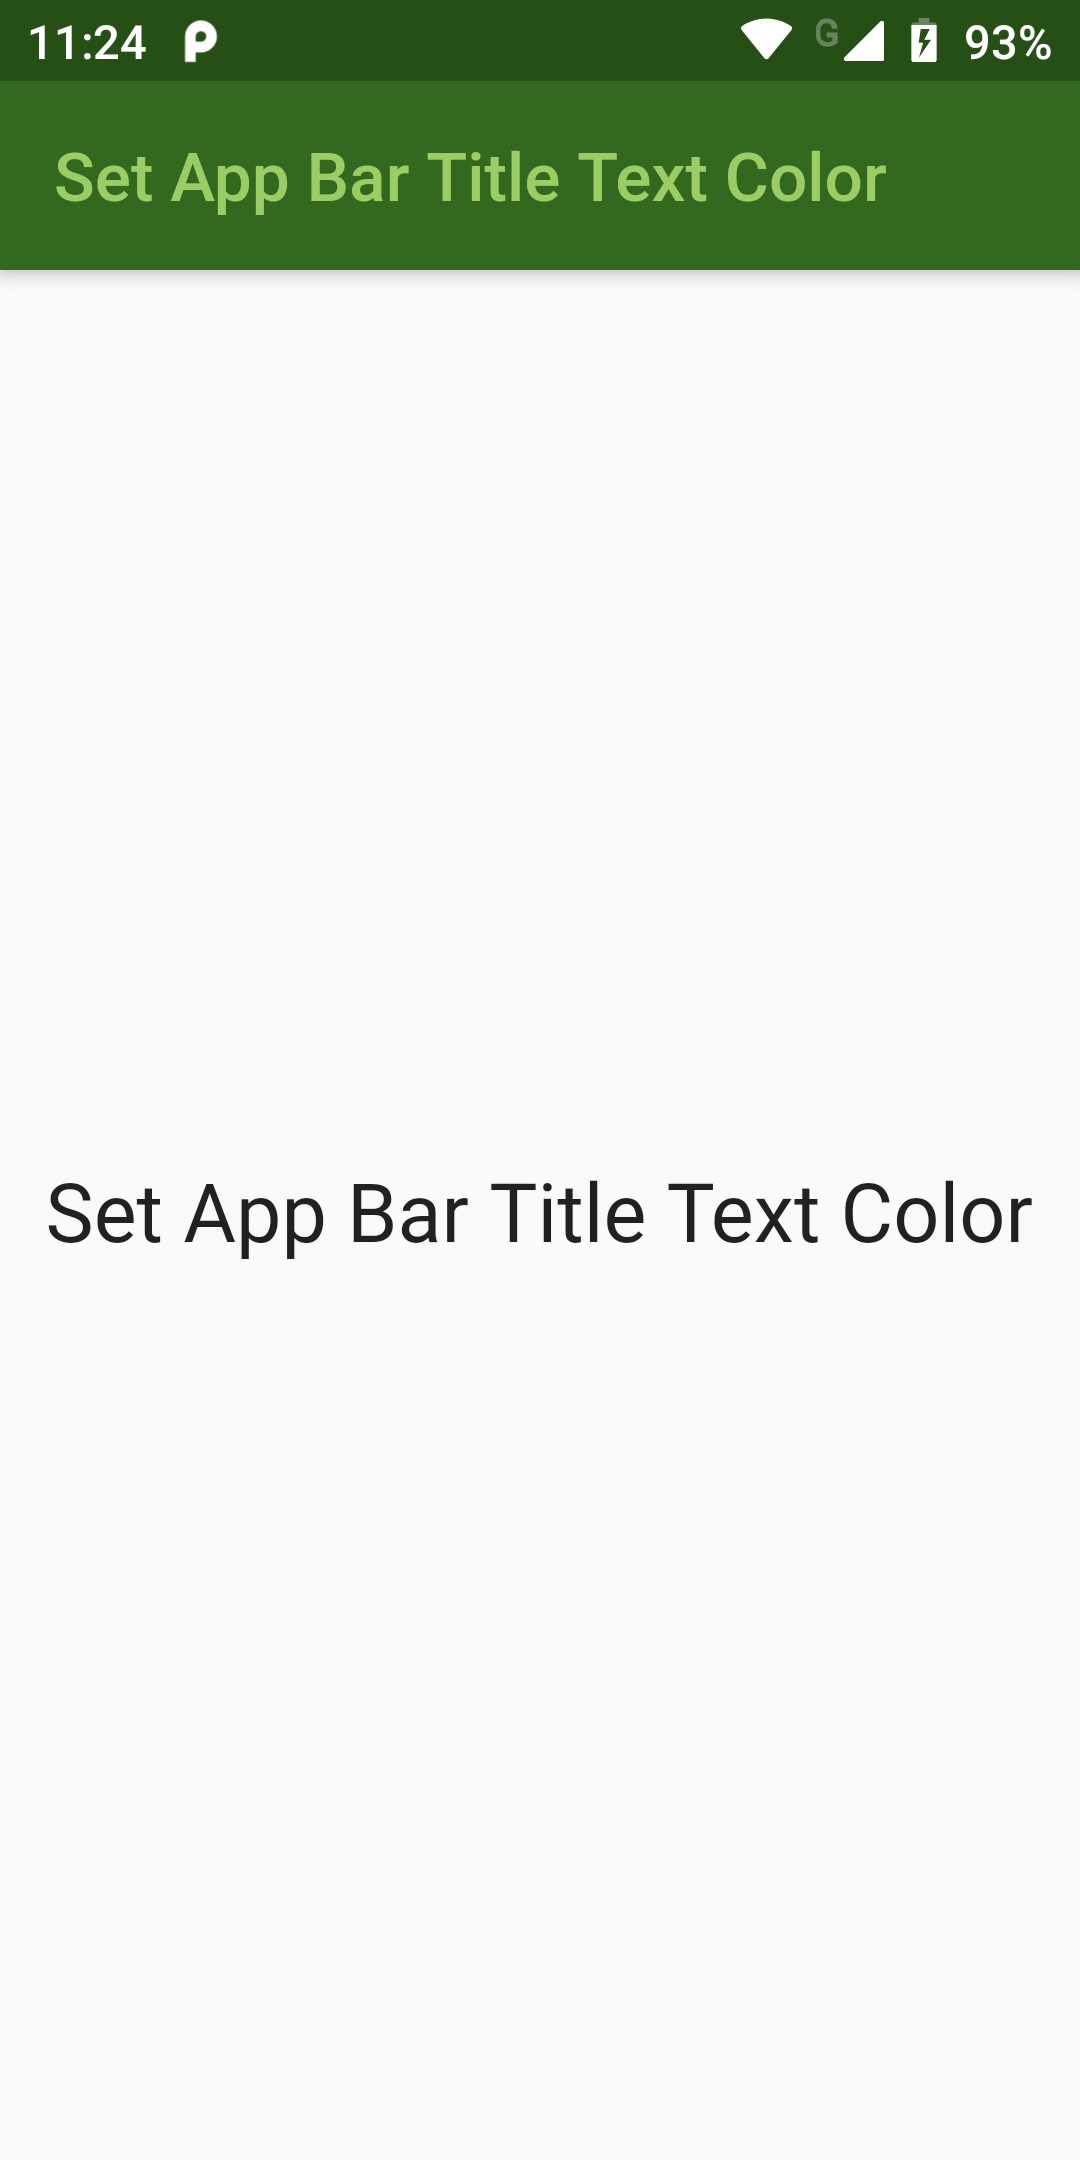 How To Set Change App Bar Title Text Color In Flutter